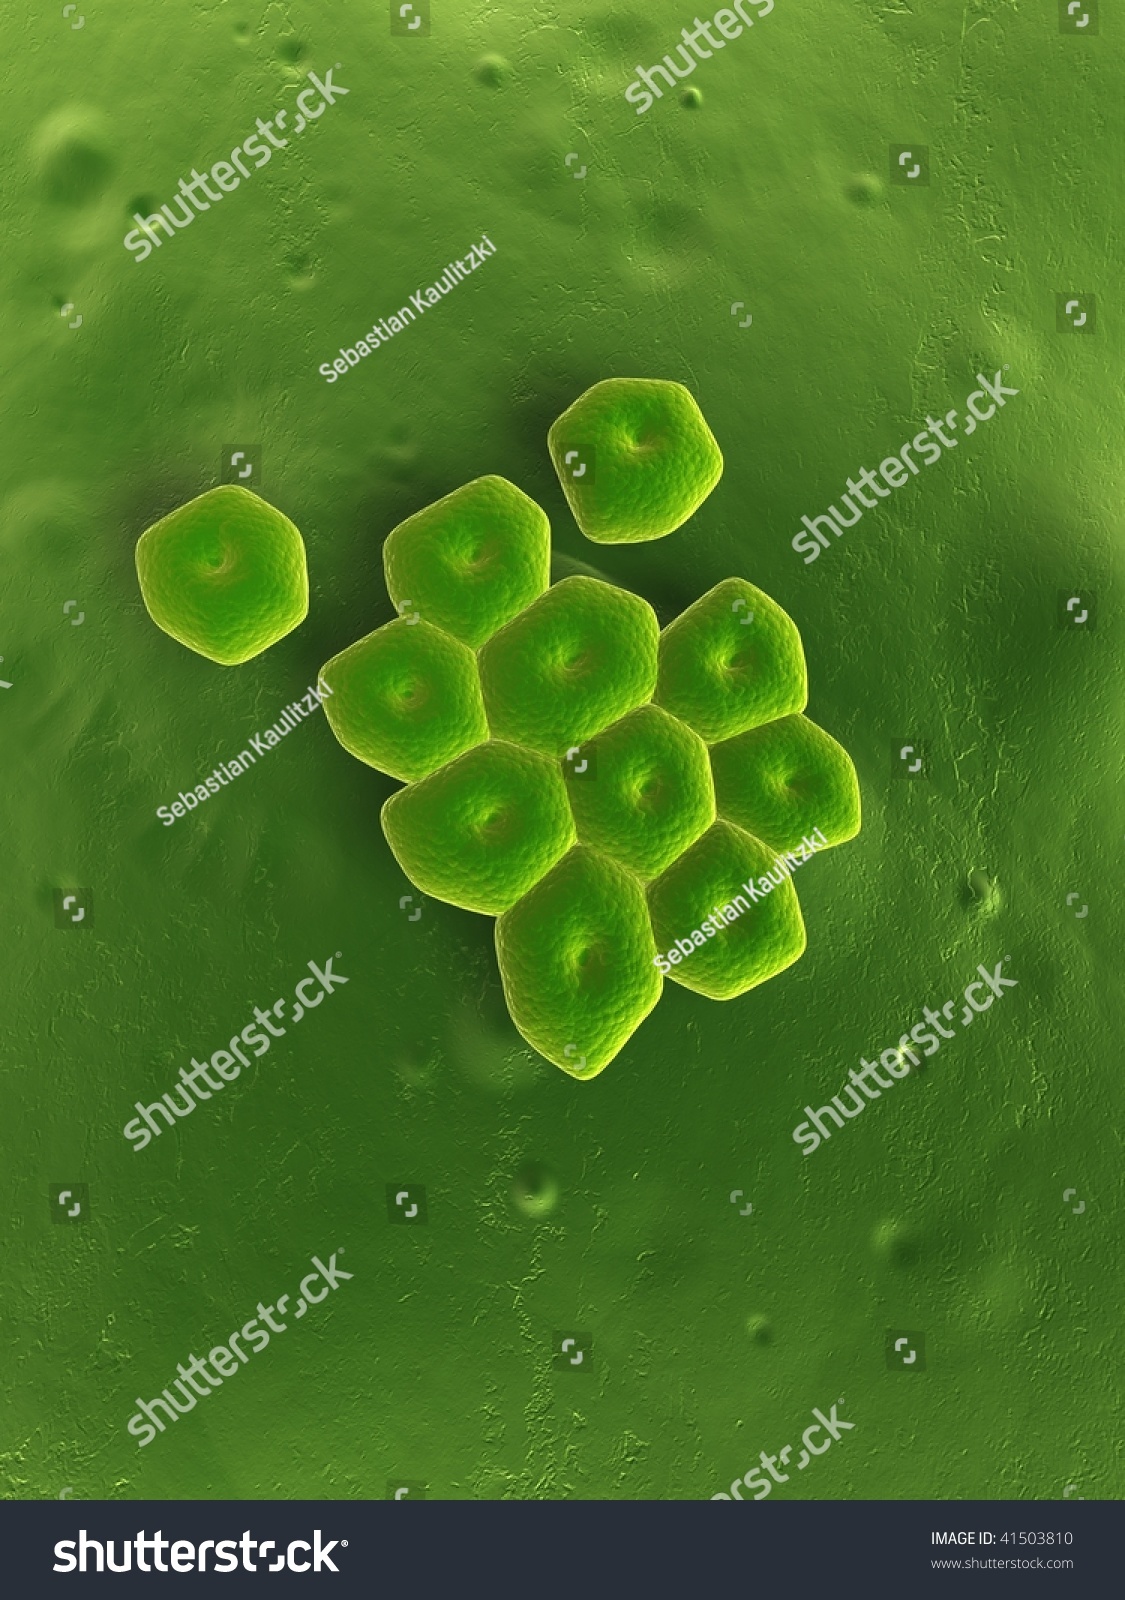 Acinetobacter Stock Illustration 41503810 - Shutterstock